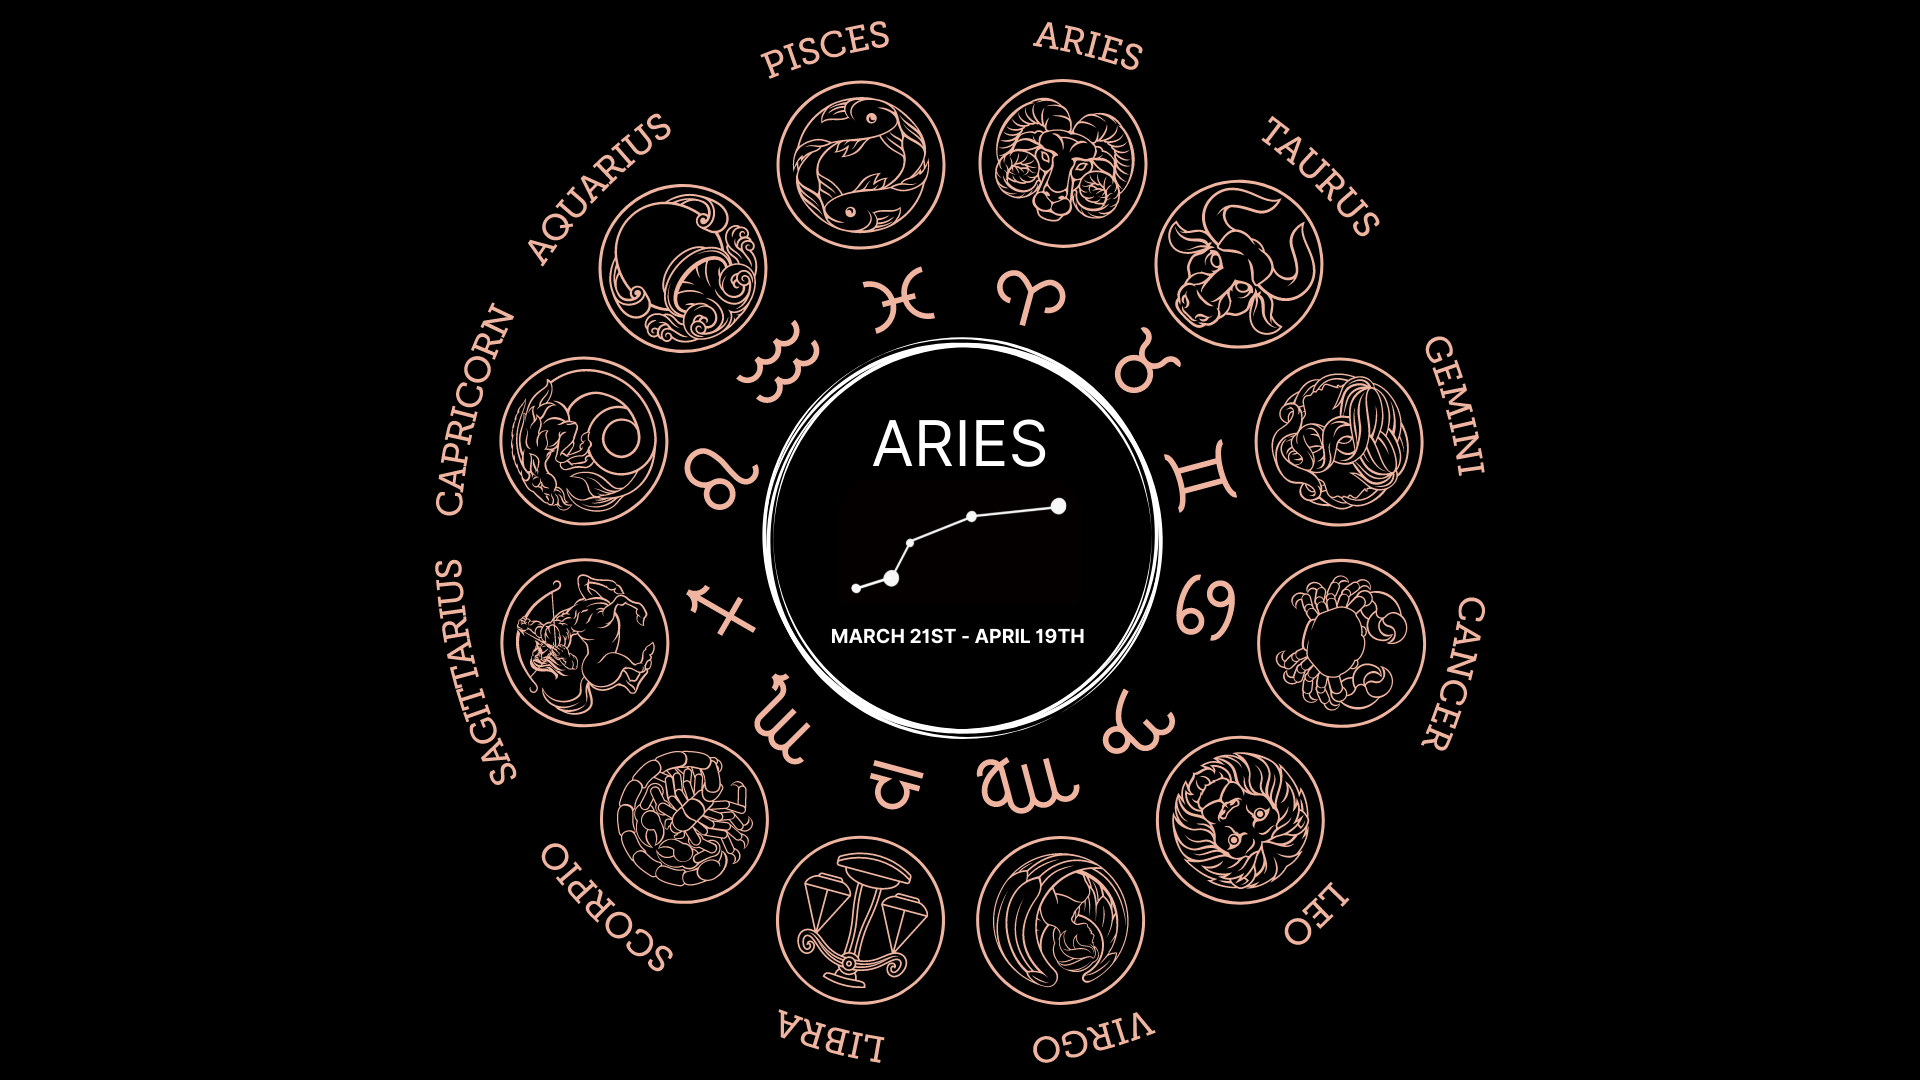 How to make Aries season YOURS!